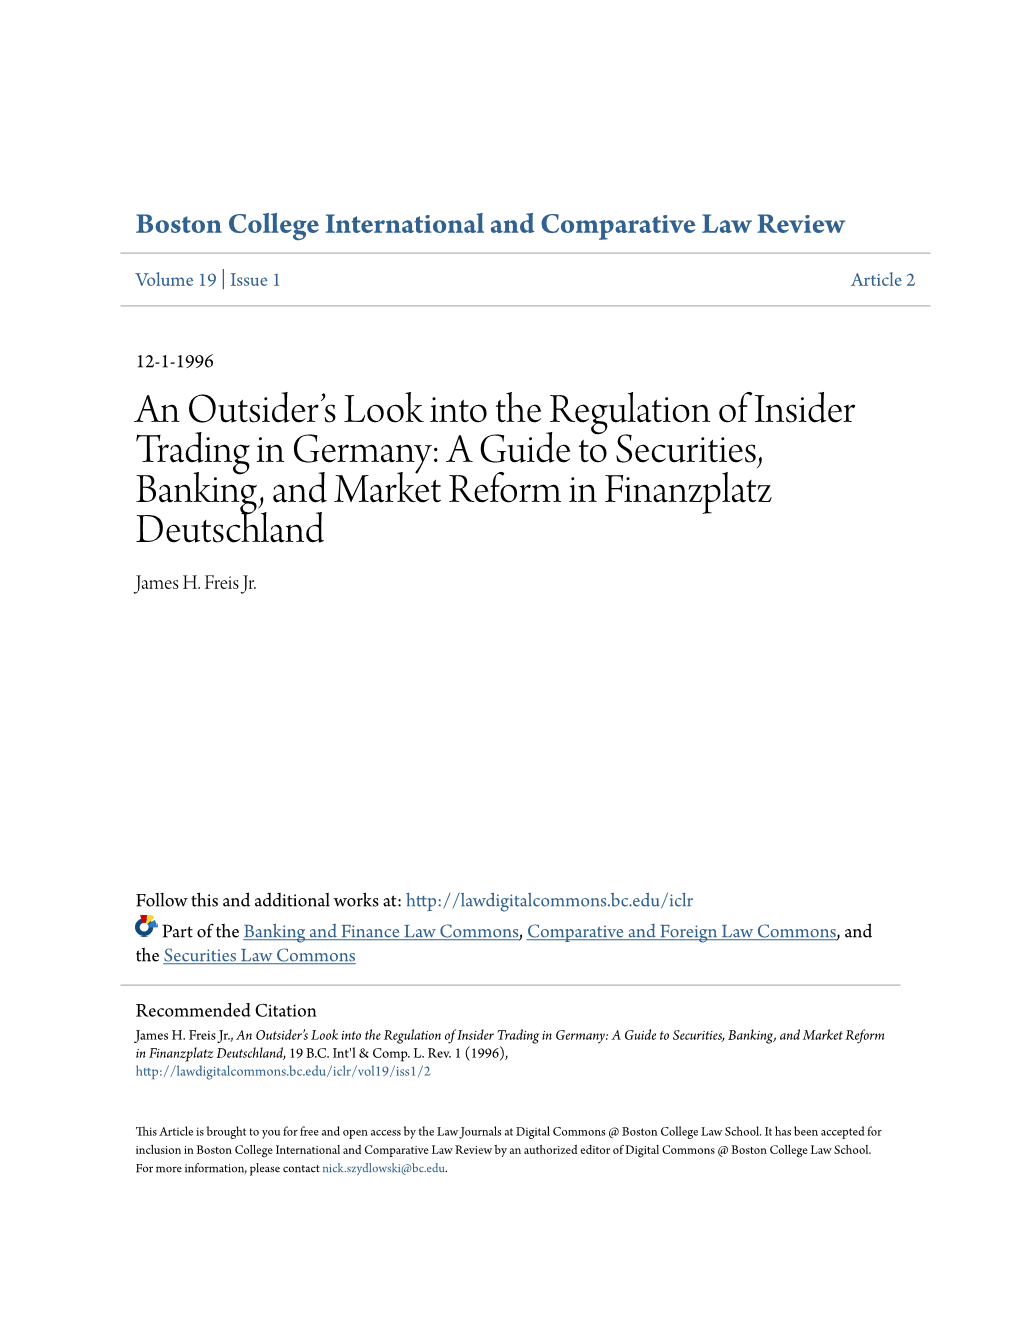 A Guide to Securities, Banking, and Market Reform in Finanzplatz Deutschland James H